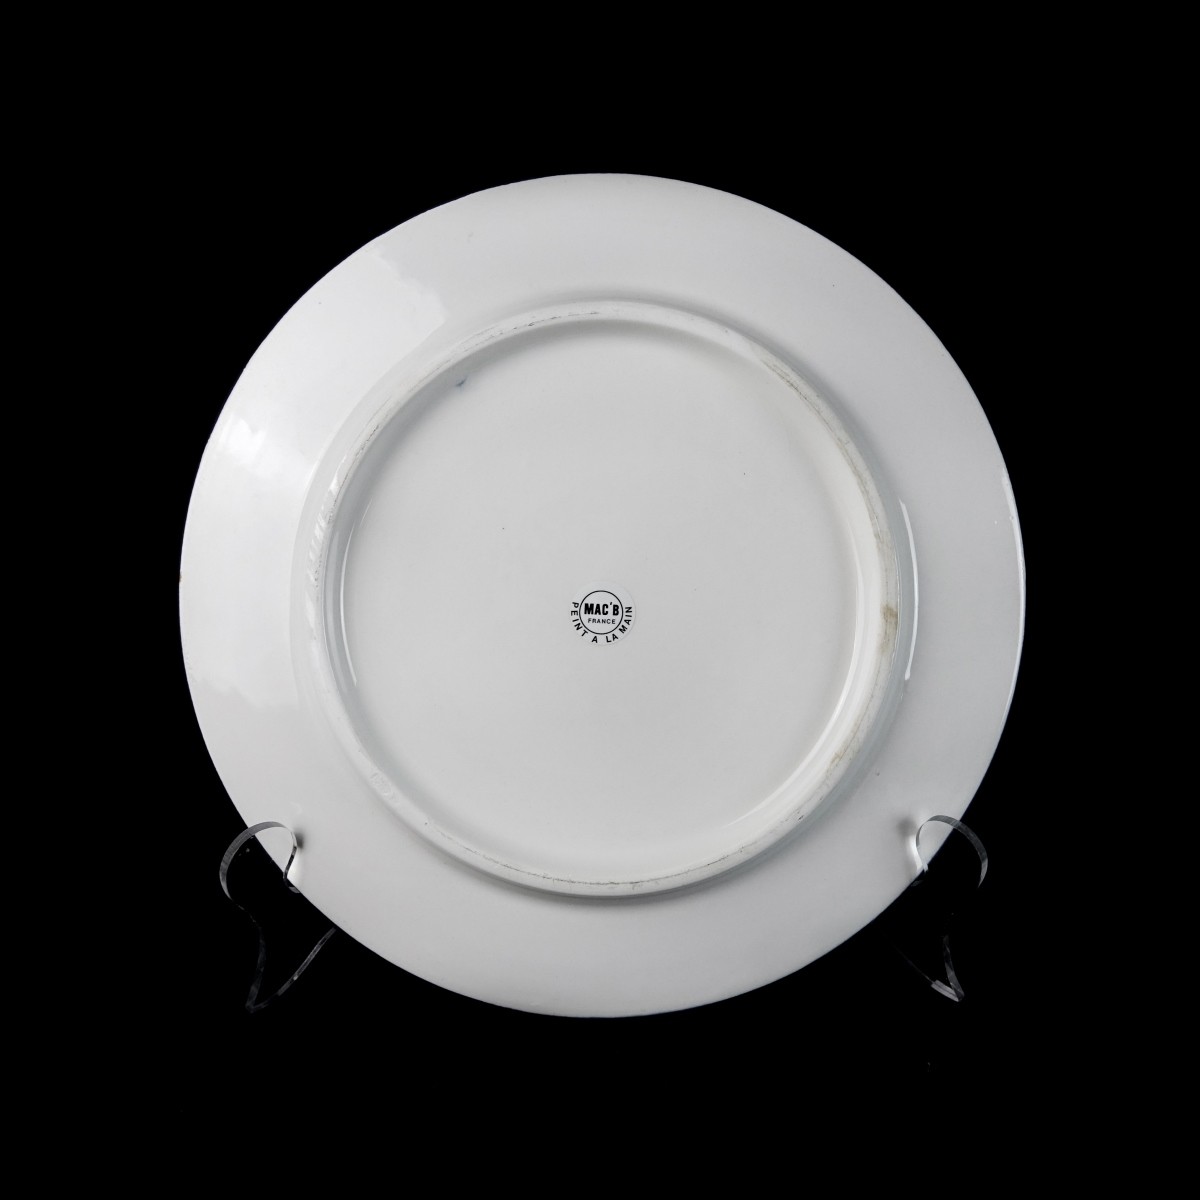 Eight (8) Mac' B French Faience Porcelain Plates